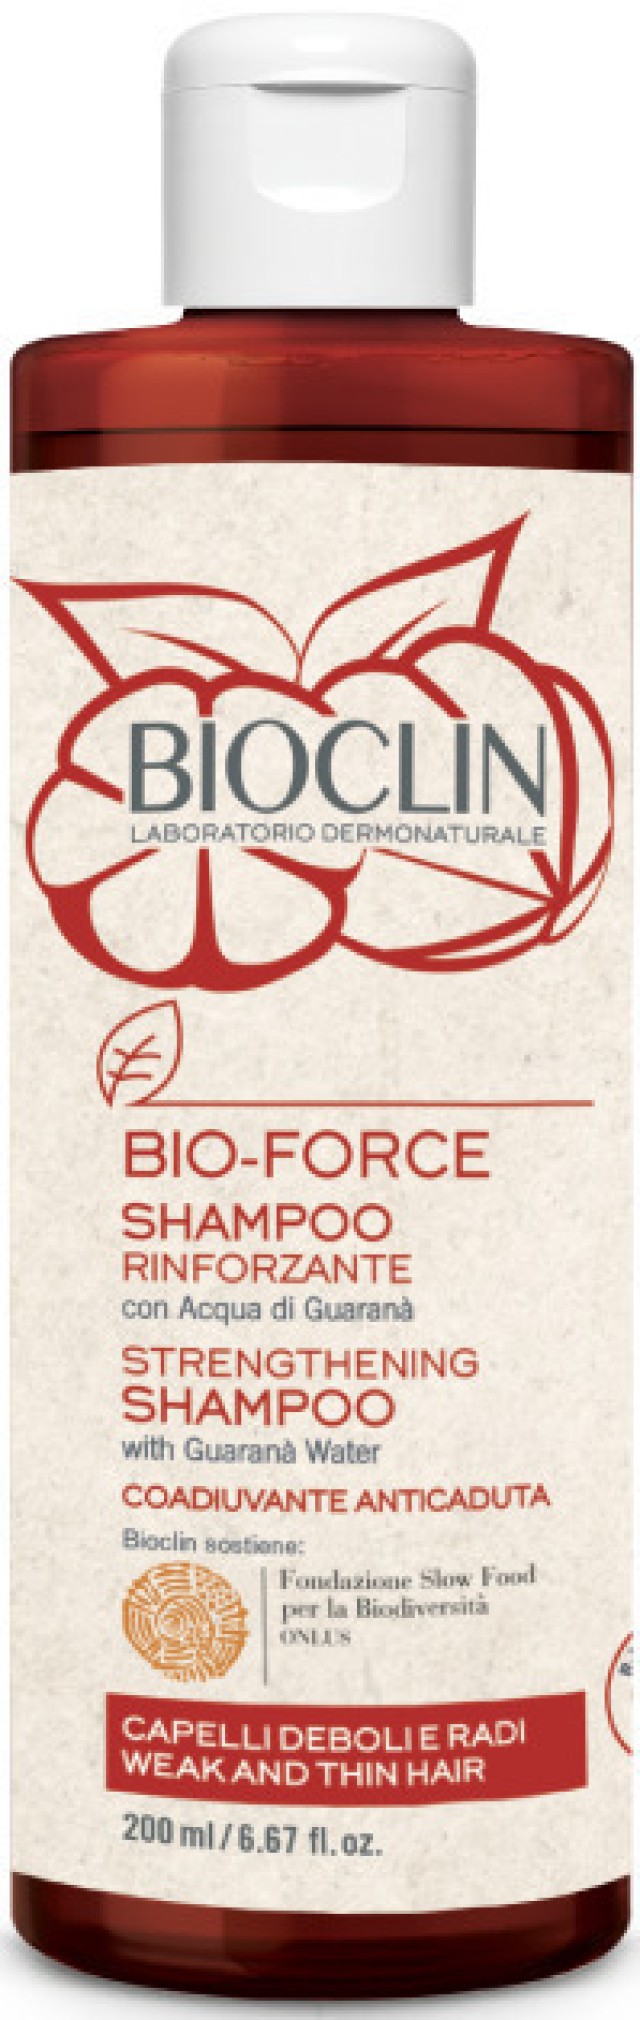 BIOCLIN Bio-Force Shampoo Rinforzante, Σαμπουάν Ενδυνάμωσης Με Νερό Σπόρων Γκουαρανά 200ml